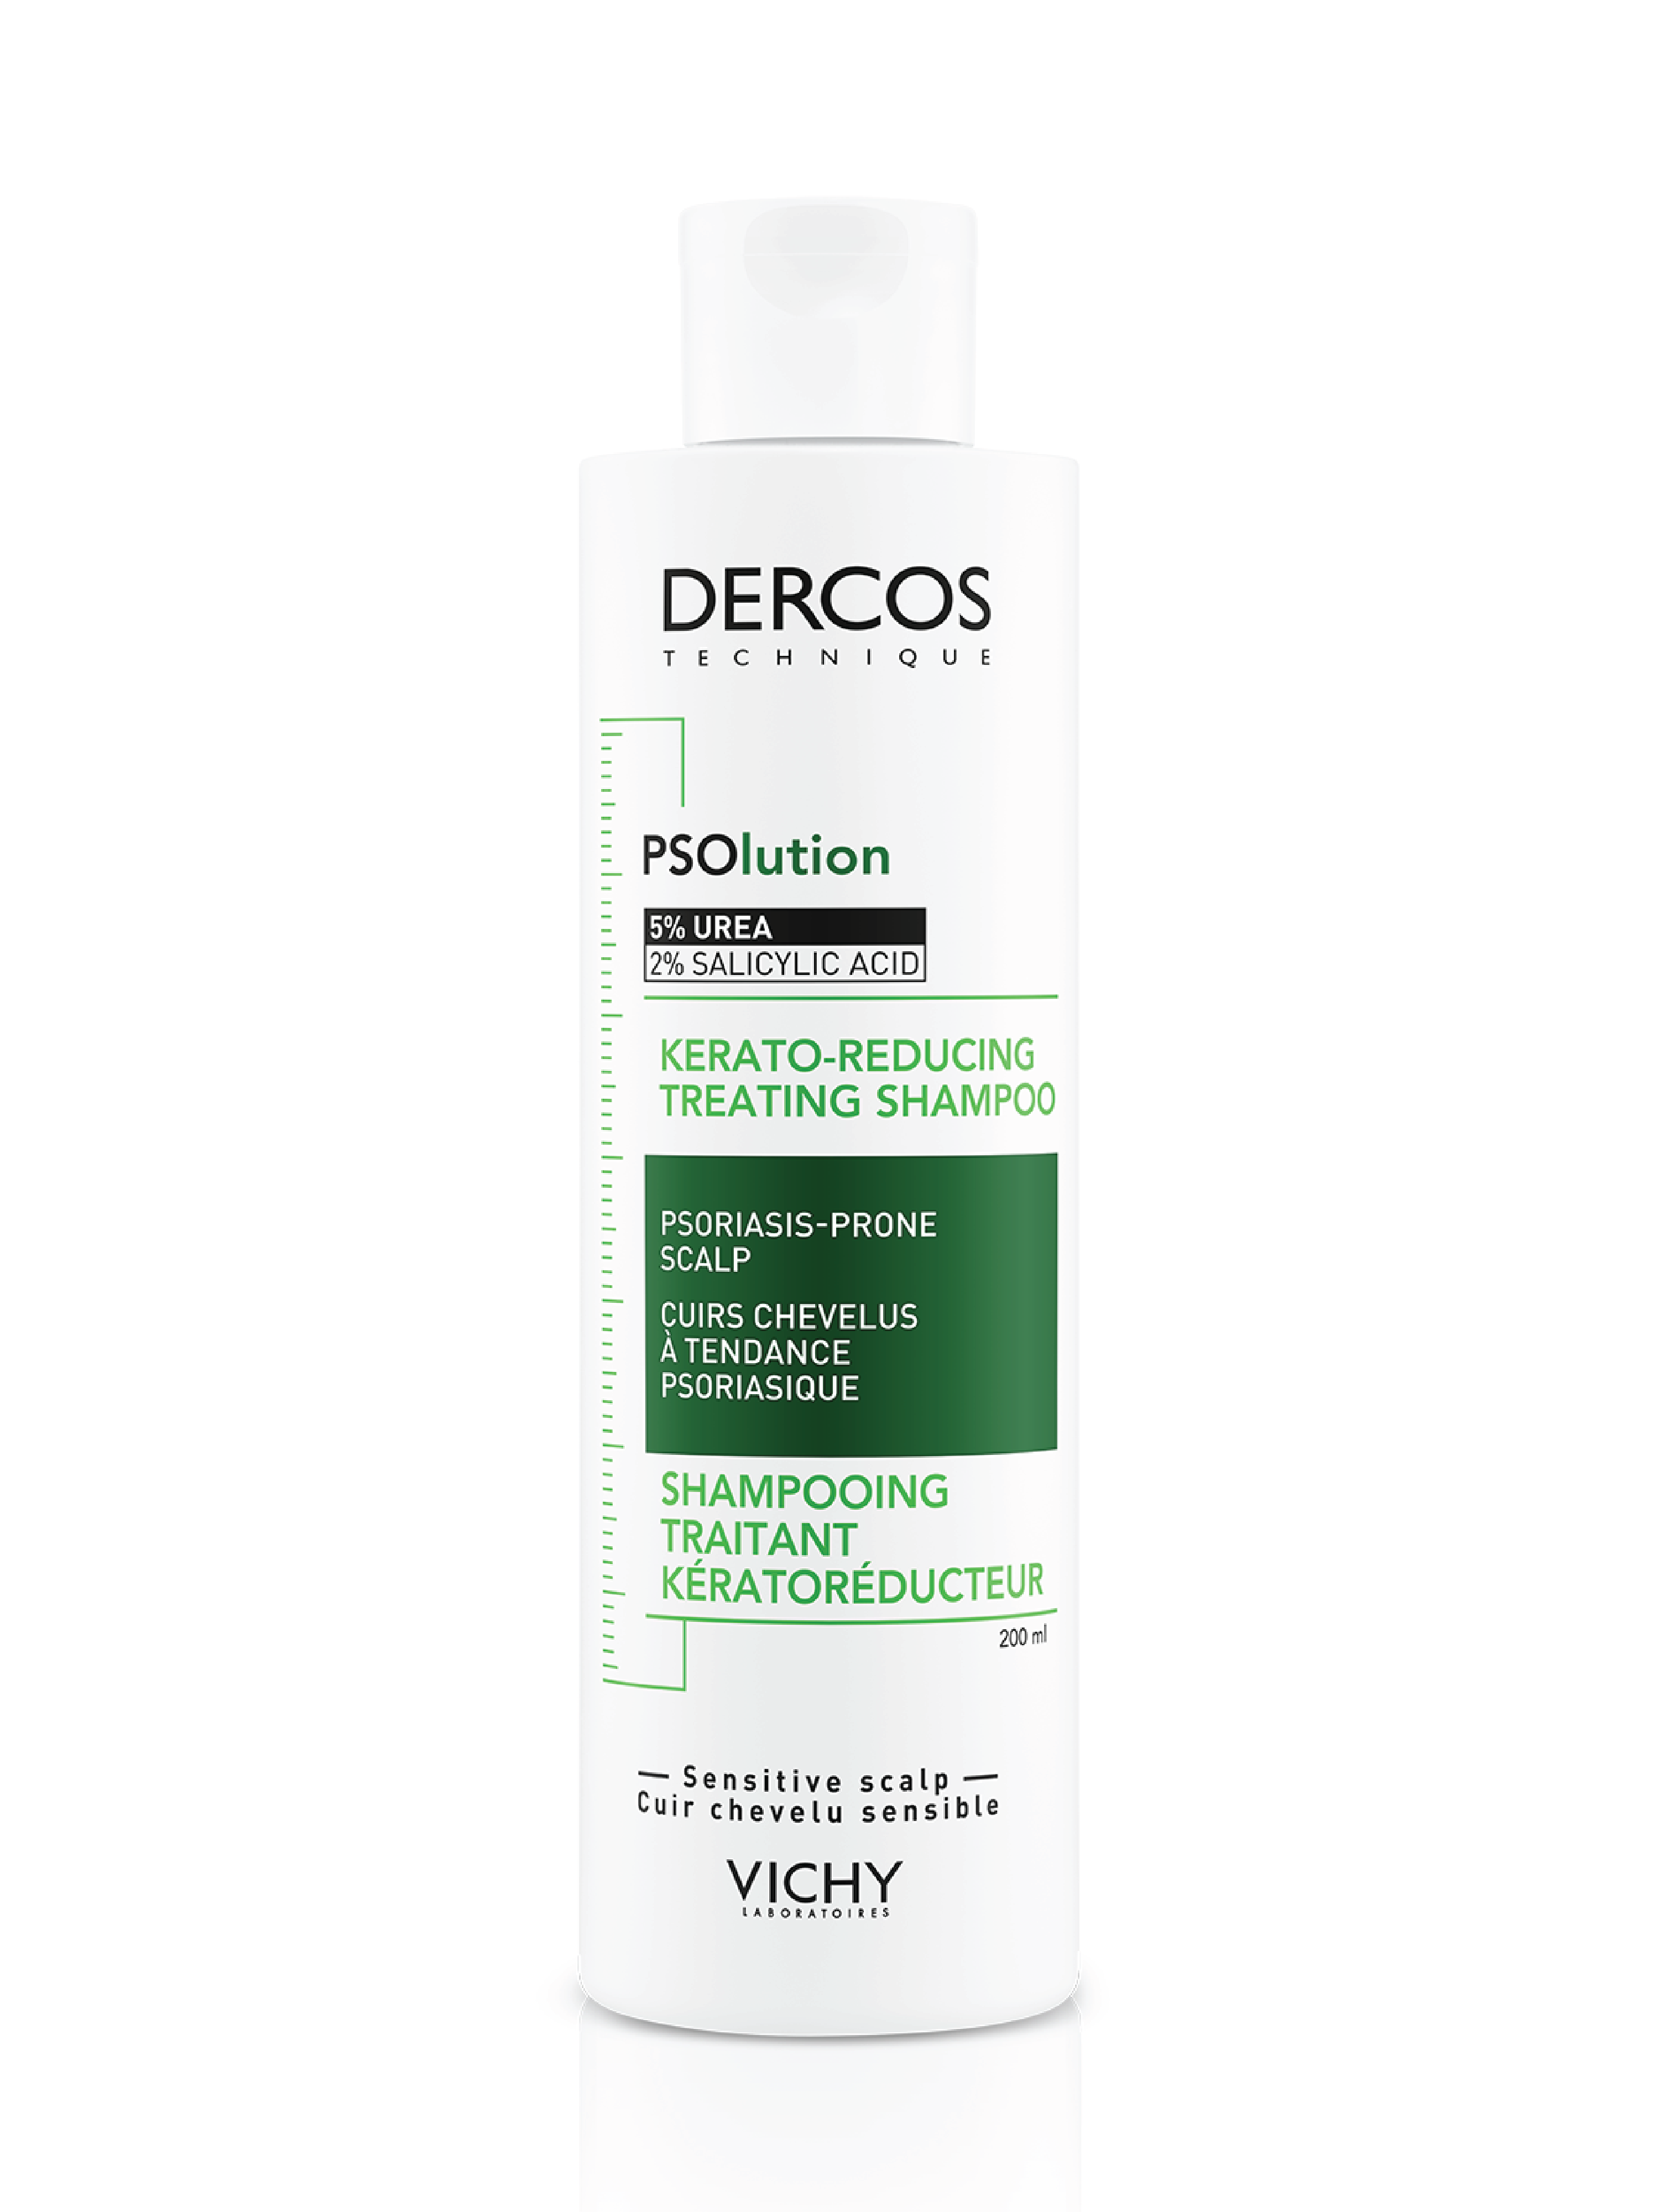 Vichy Dercos Technique PSOlution Shampoo, 200 ml